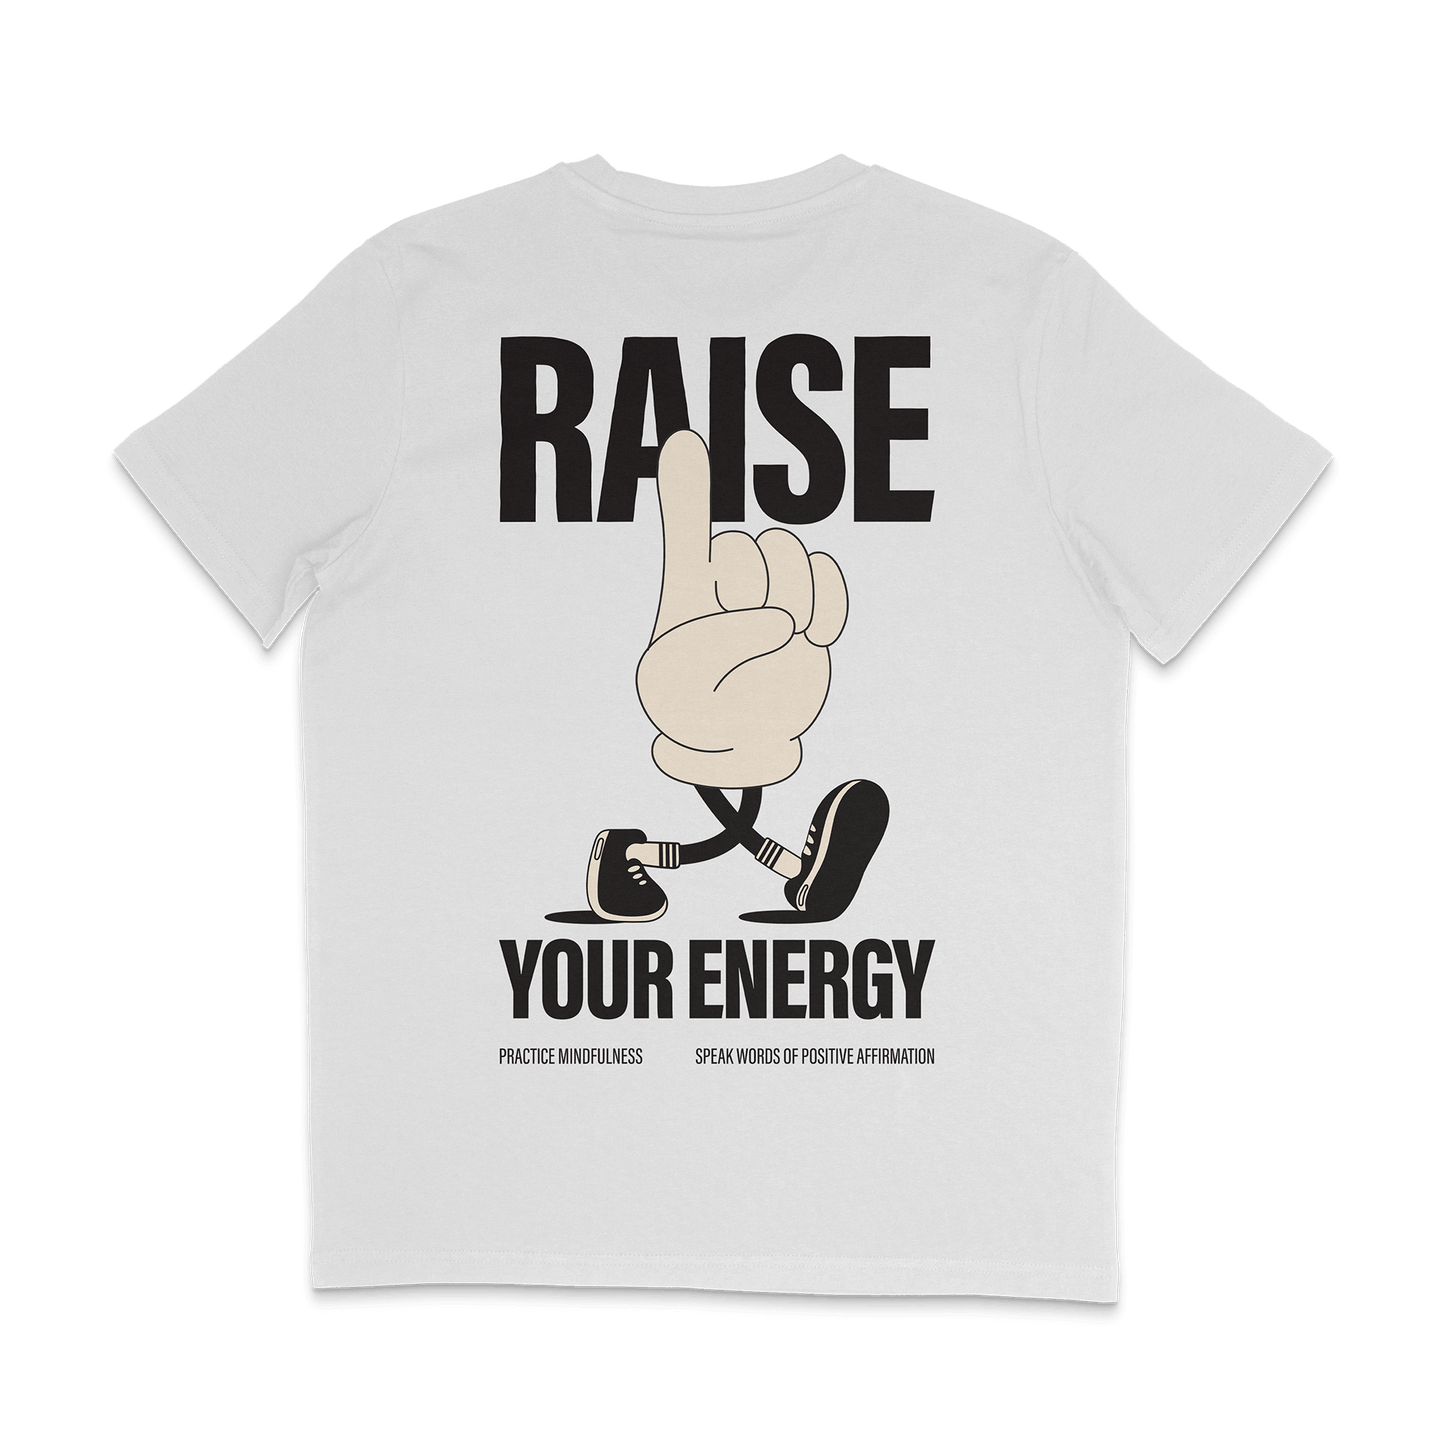 Raise your energy tee, good energy unisex t-shirt